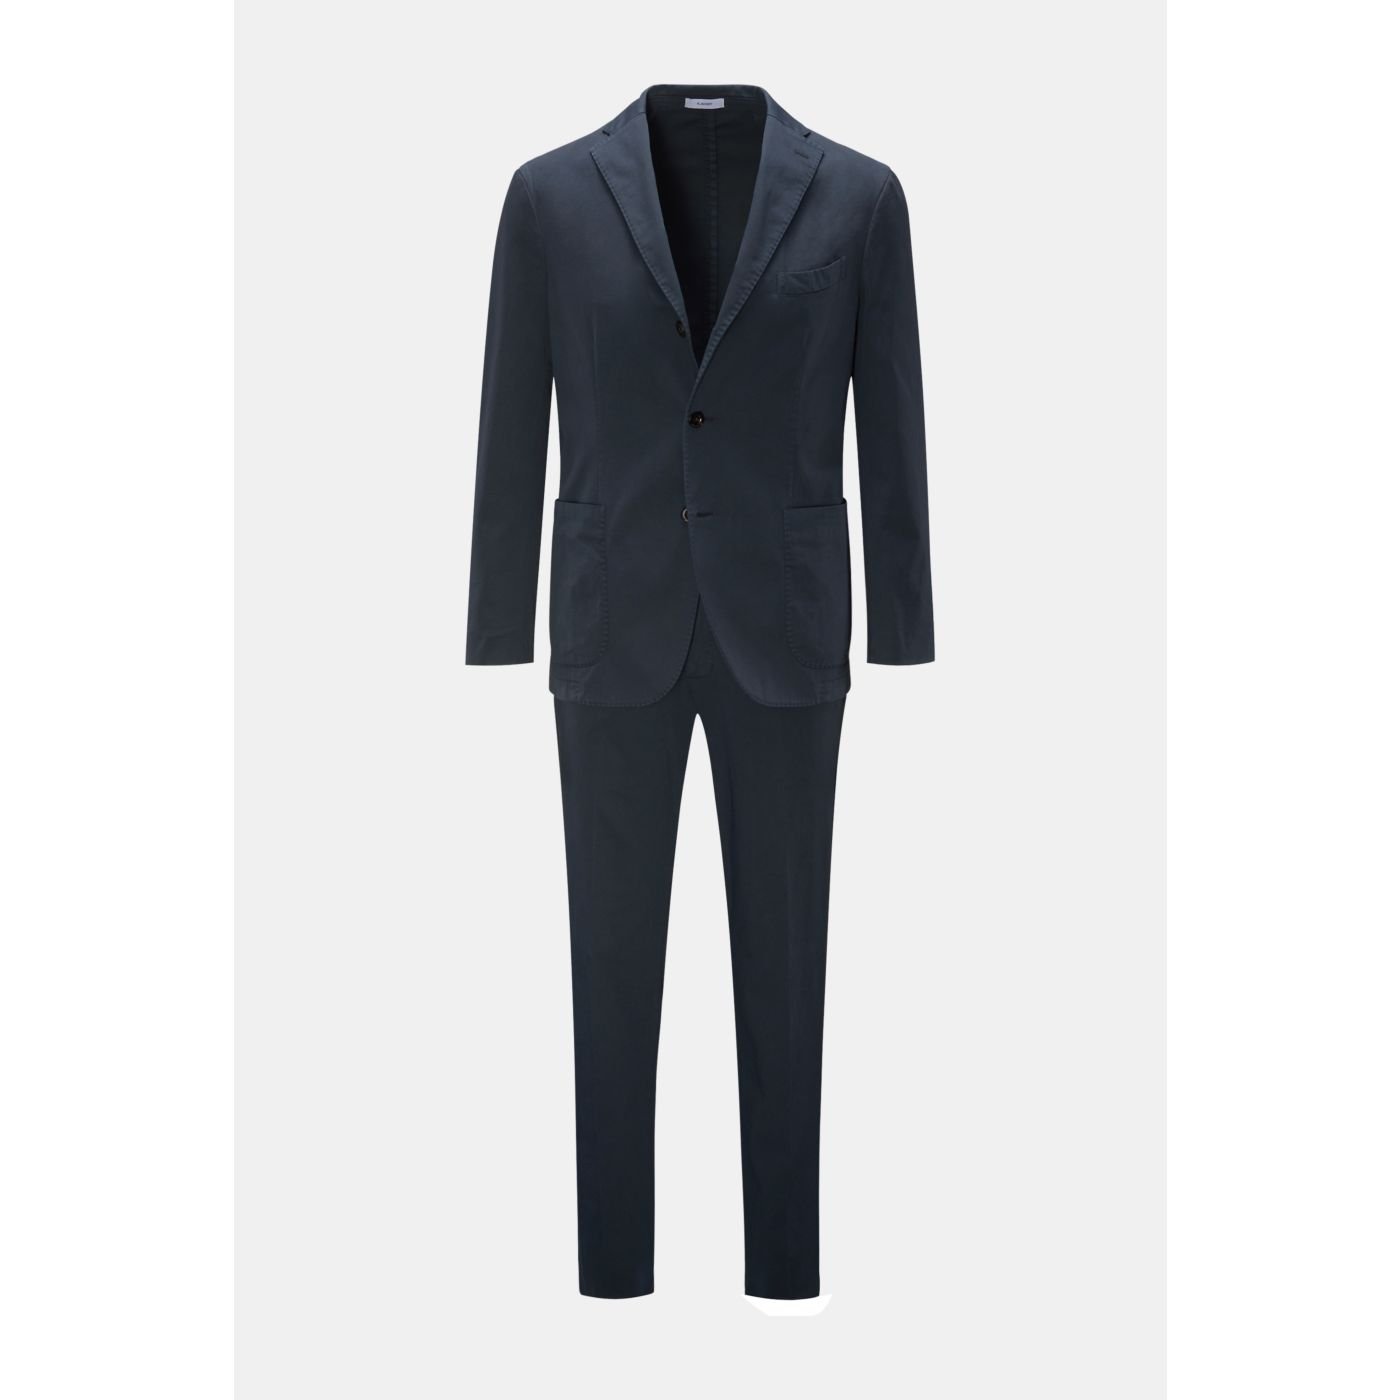 BOGLIOLI cotton suit 'K.Jacket' navy | BRAUN Hamburg